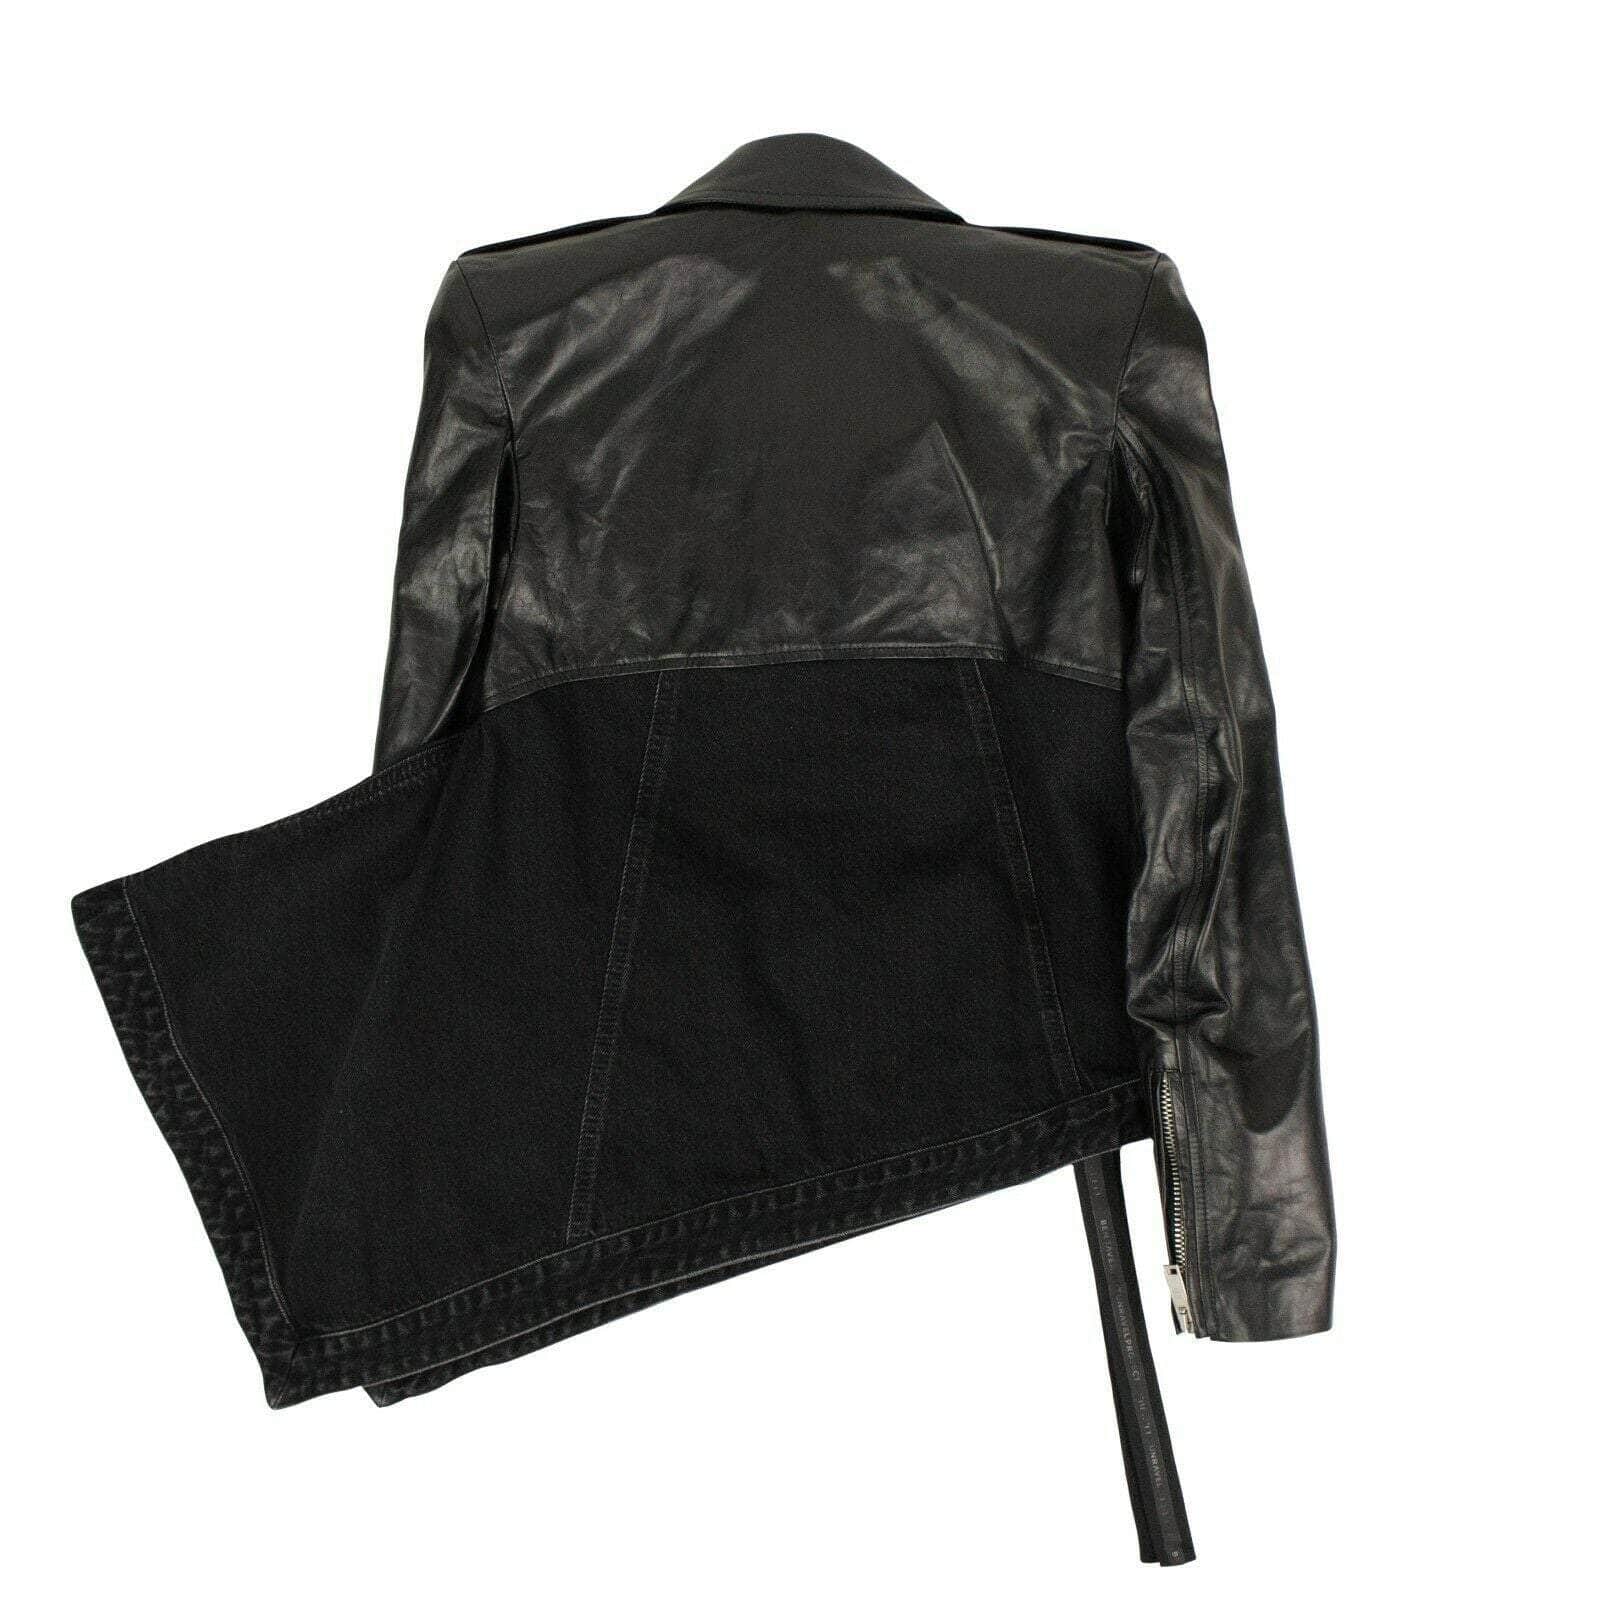 Unravel Project Women's Jackets Asymmetric Denim & Leather Biker Jacket - Black